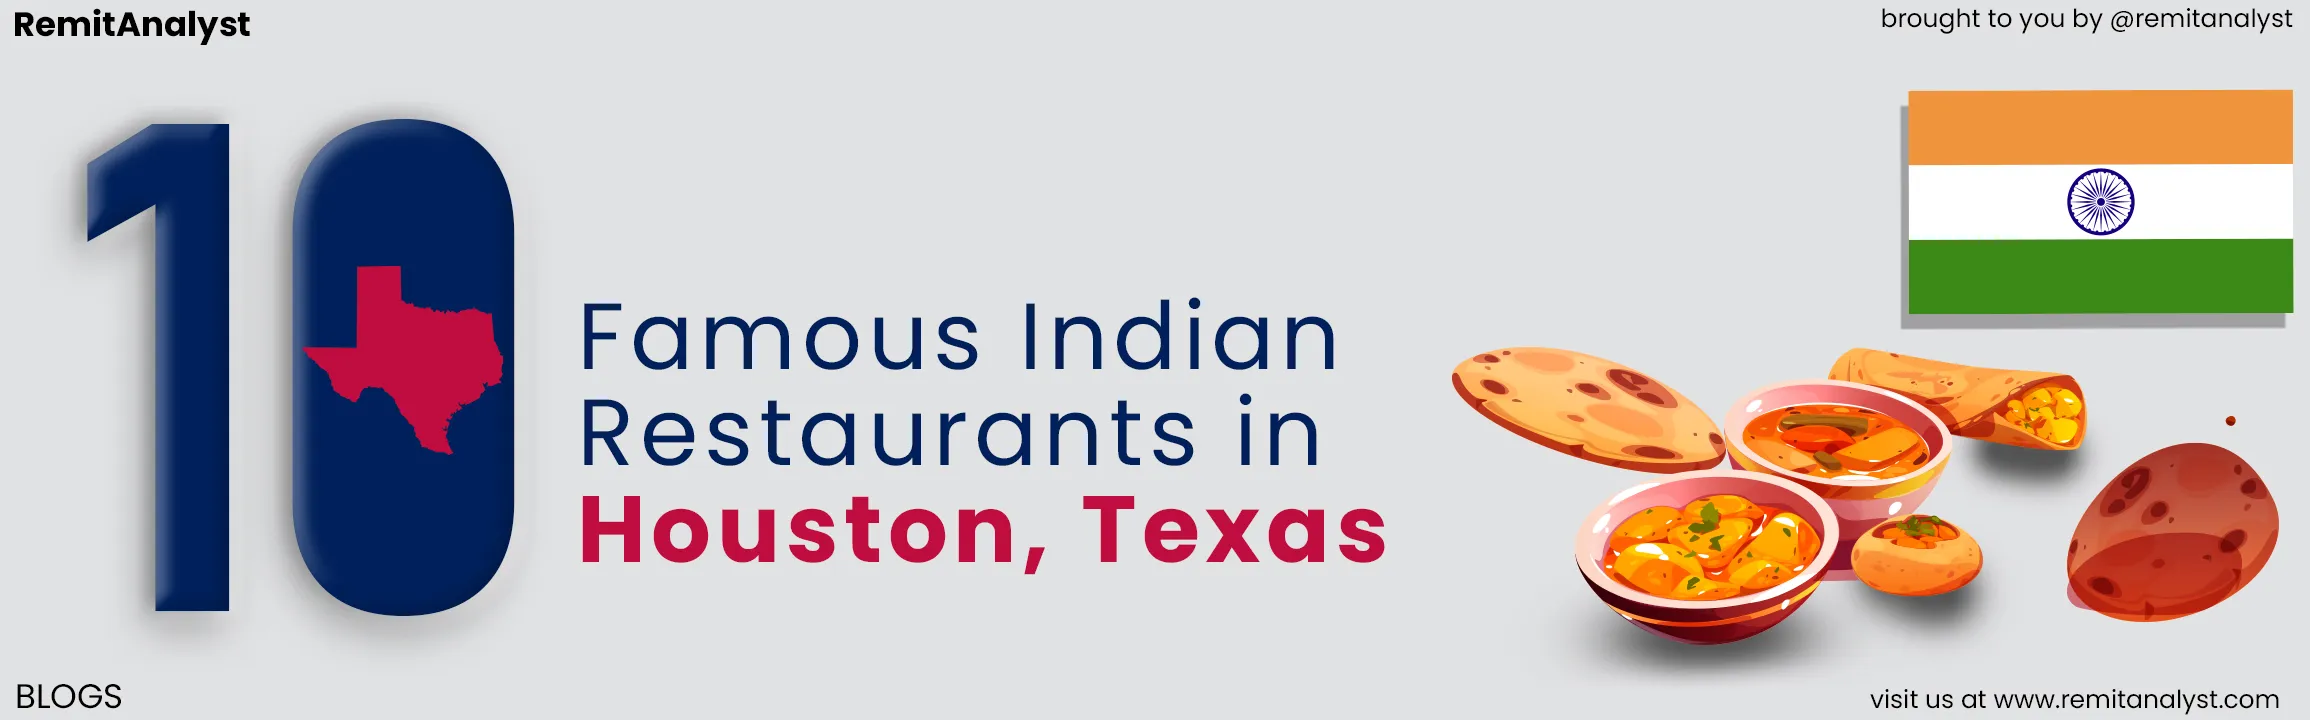 famous-indian-restaurants-houston-title